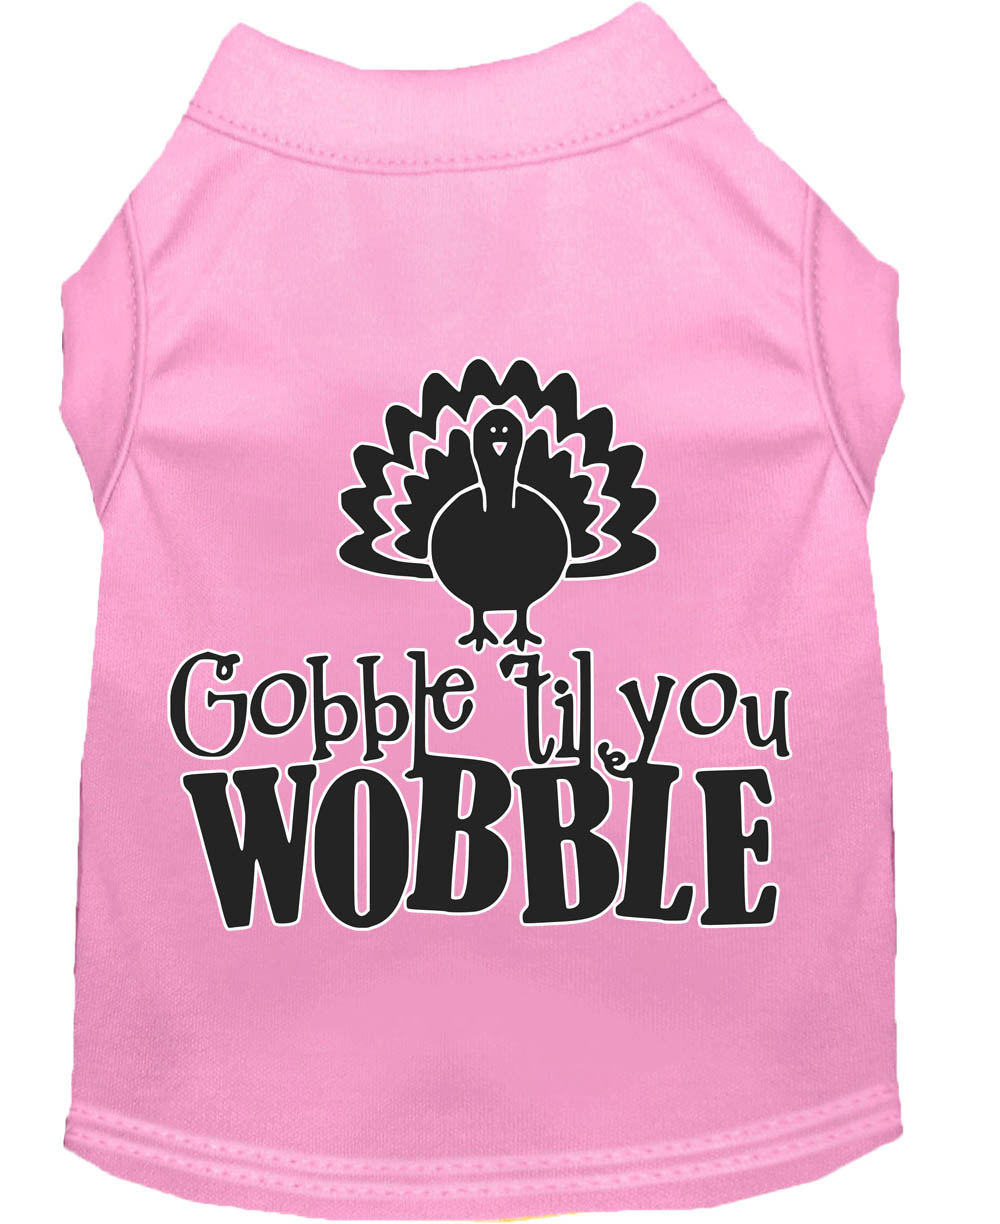 Gobble til You Wobble Screen Print Dog Shirt Light Pink Lg